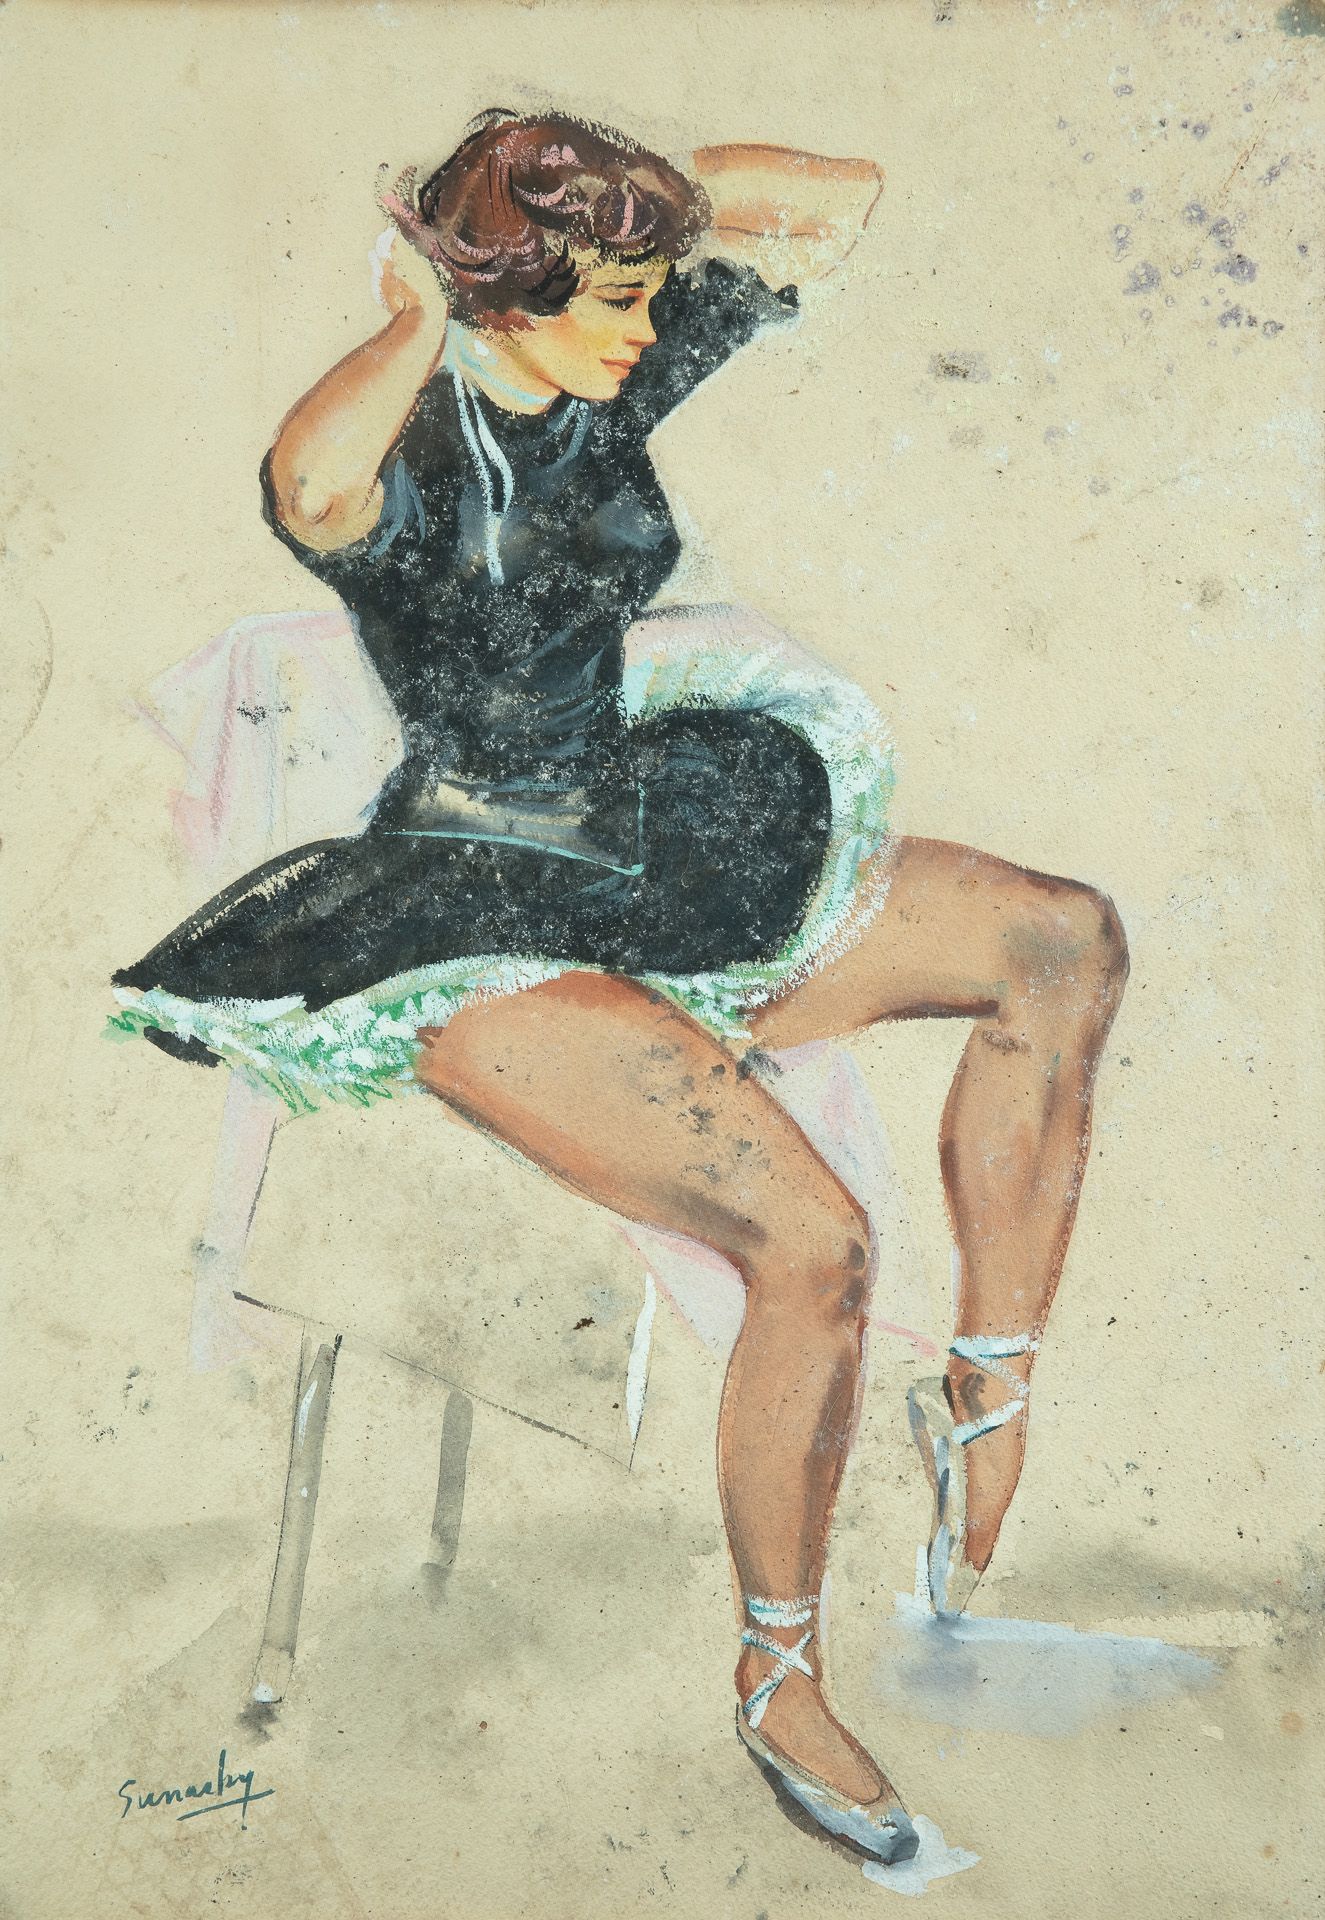 Null GUNARKY ( xx ème) 

Ballerina 

Aquarell, 61 x 42 cm, SBG. Alterationen